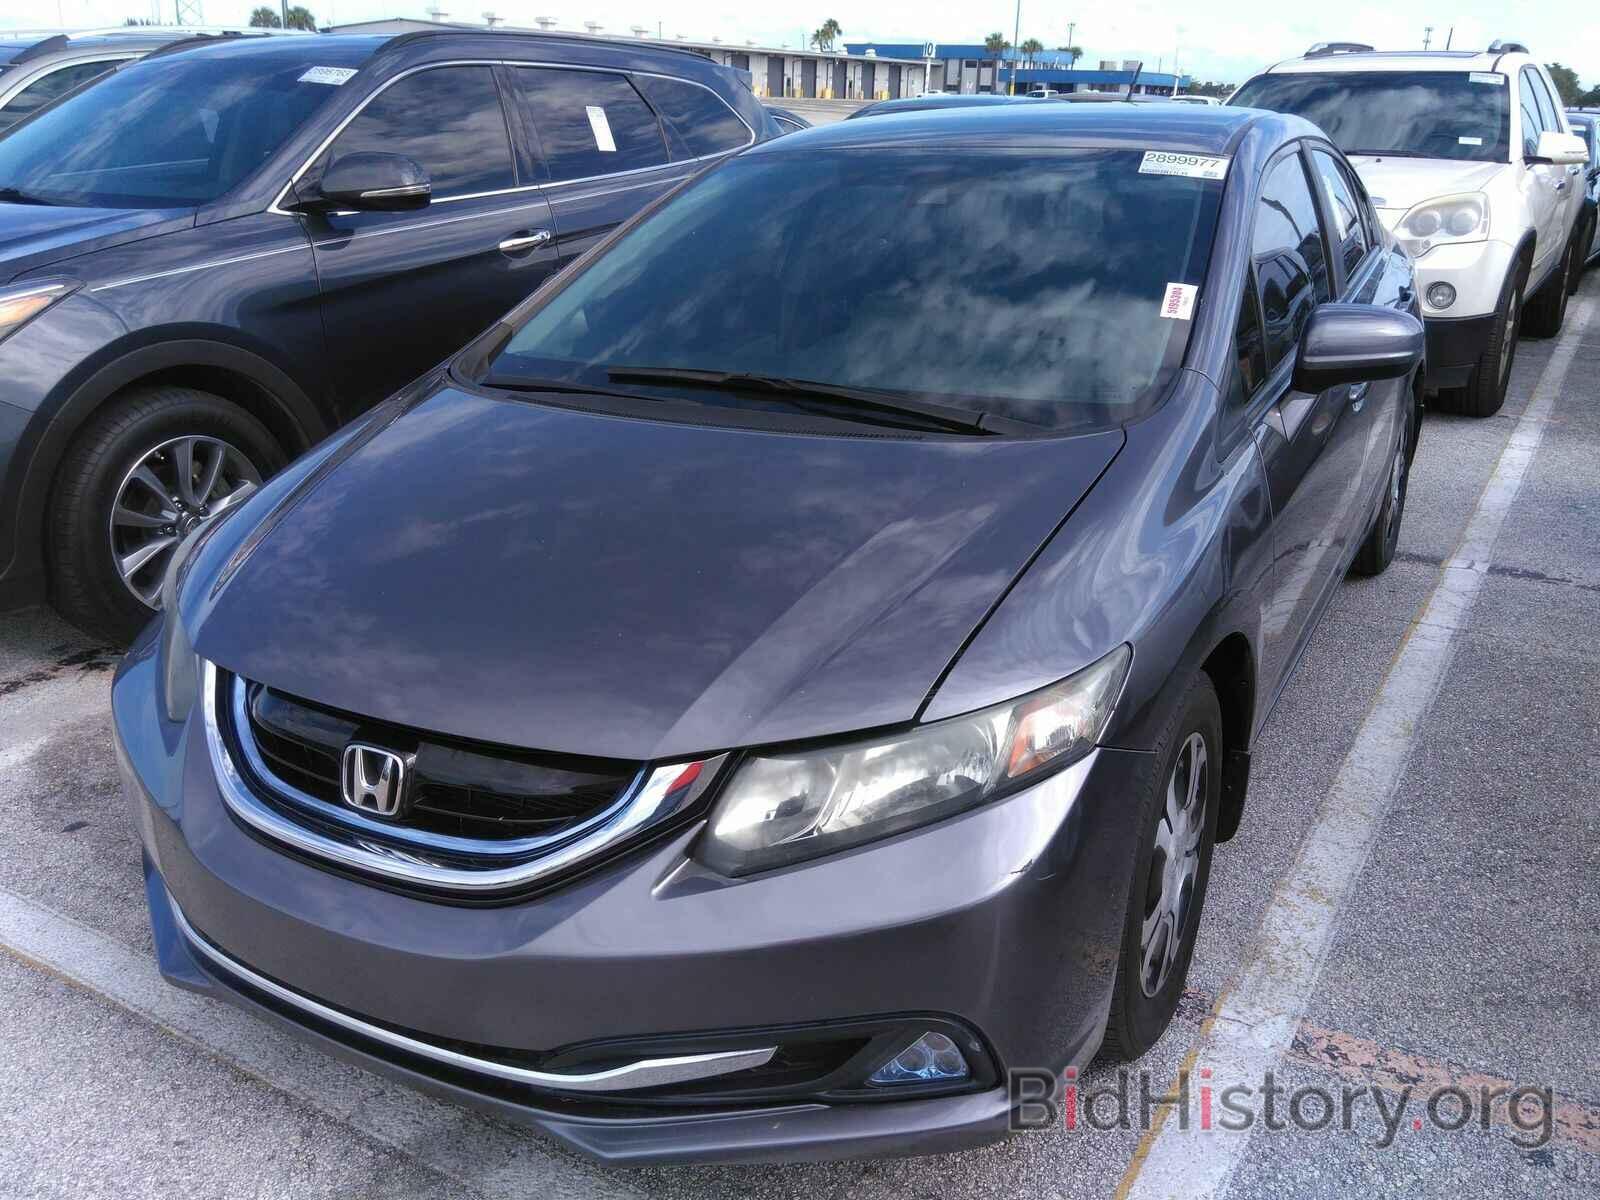 Photo 19XFB4F23FE001700 - Honda Civic Hybrid 2015